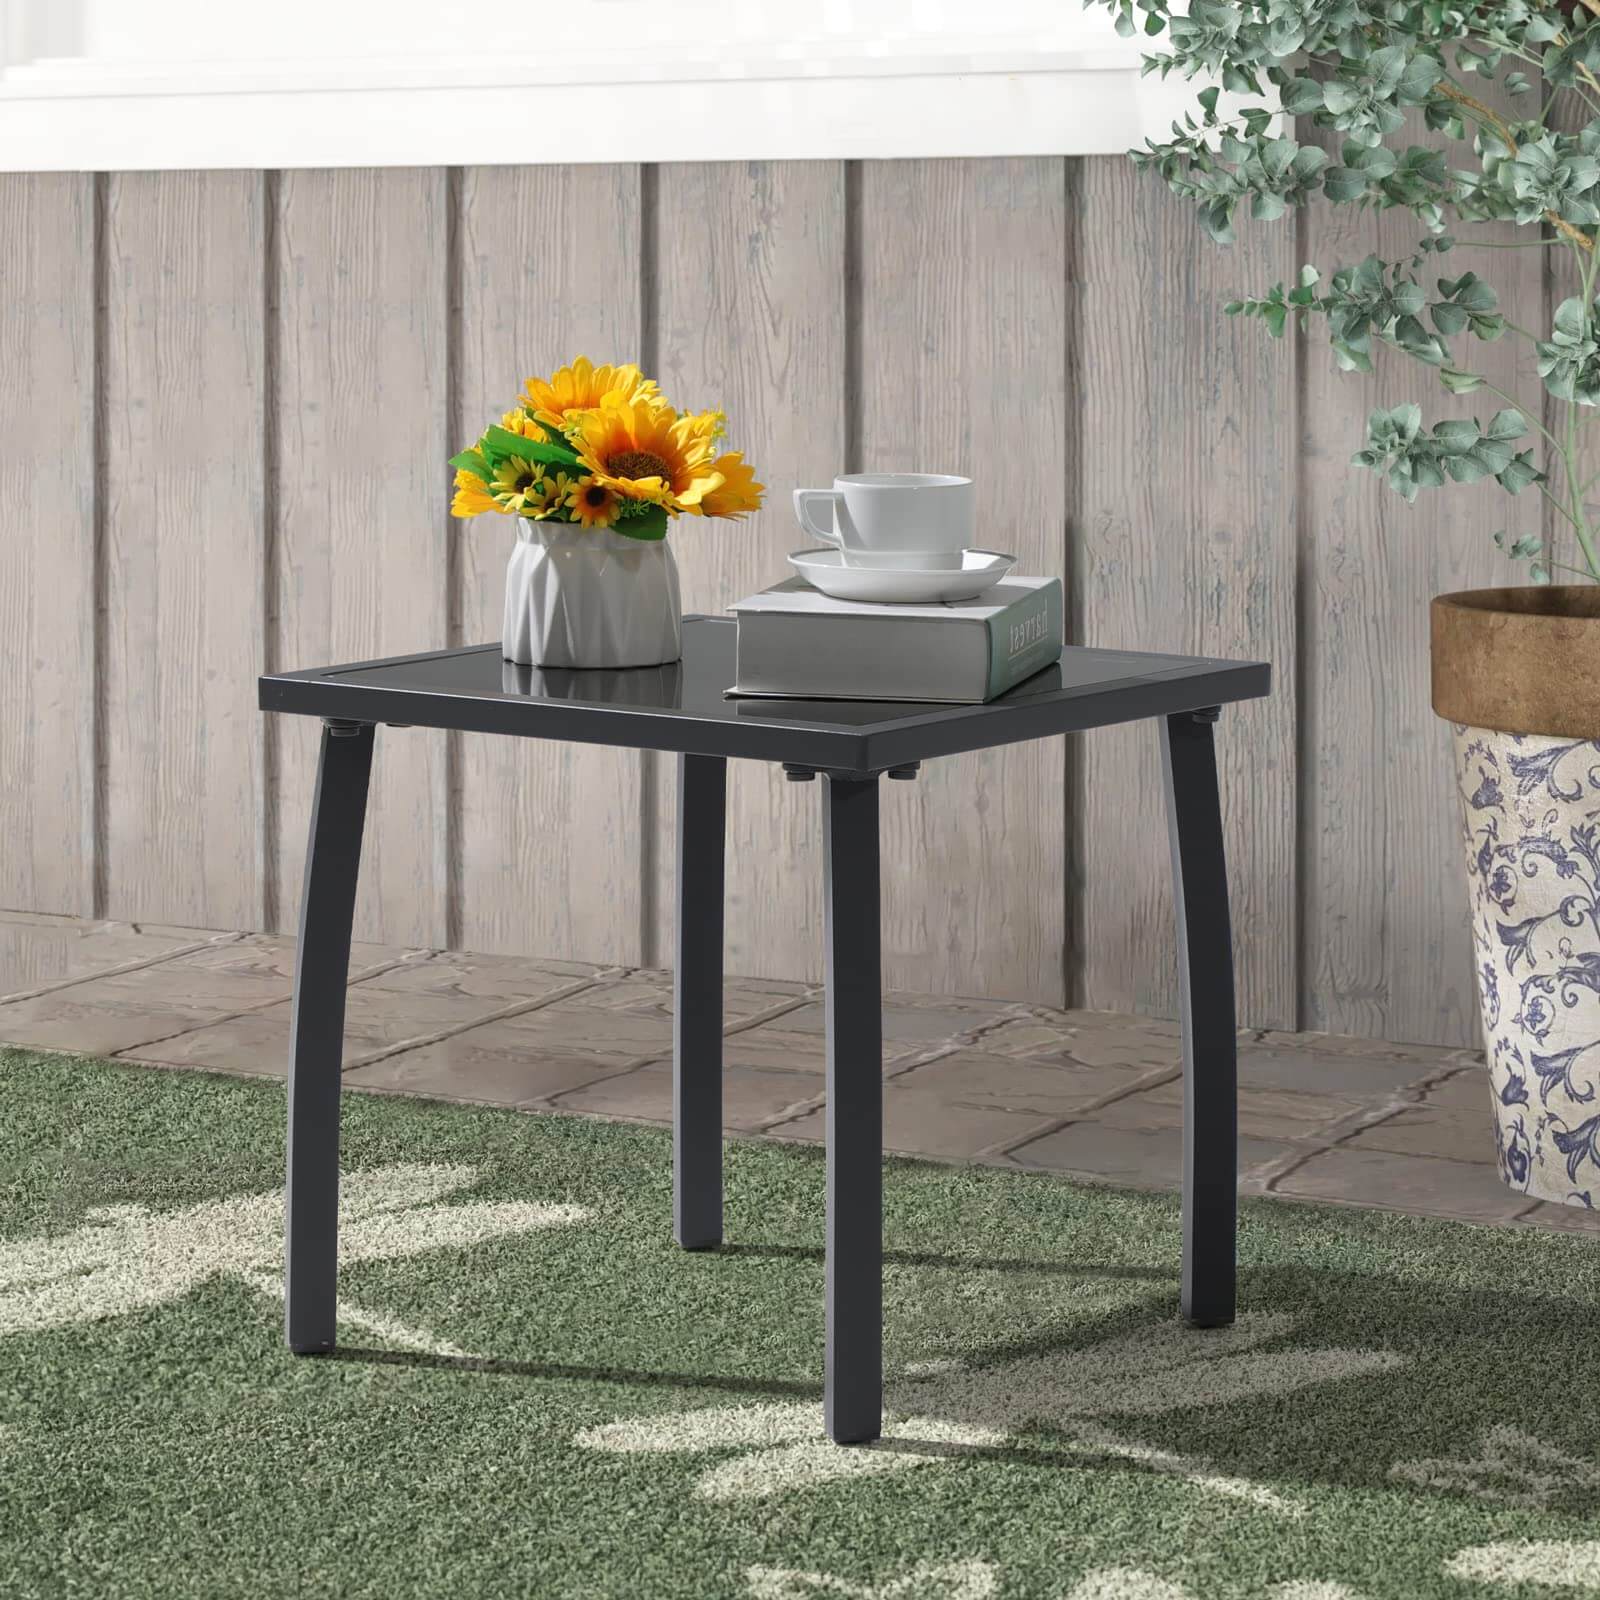 Outdoor Side Table, Patio Square Aluminum End Table for Garden, Backyard, Balcony, Brown